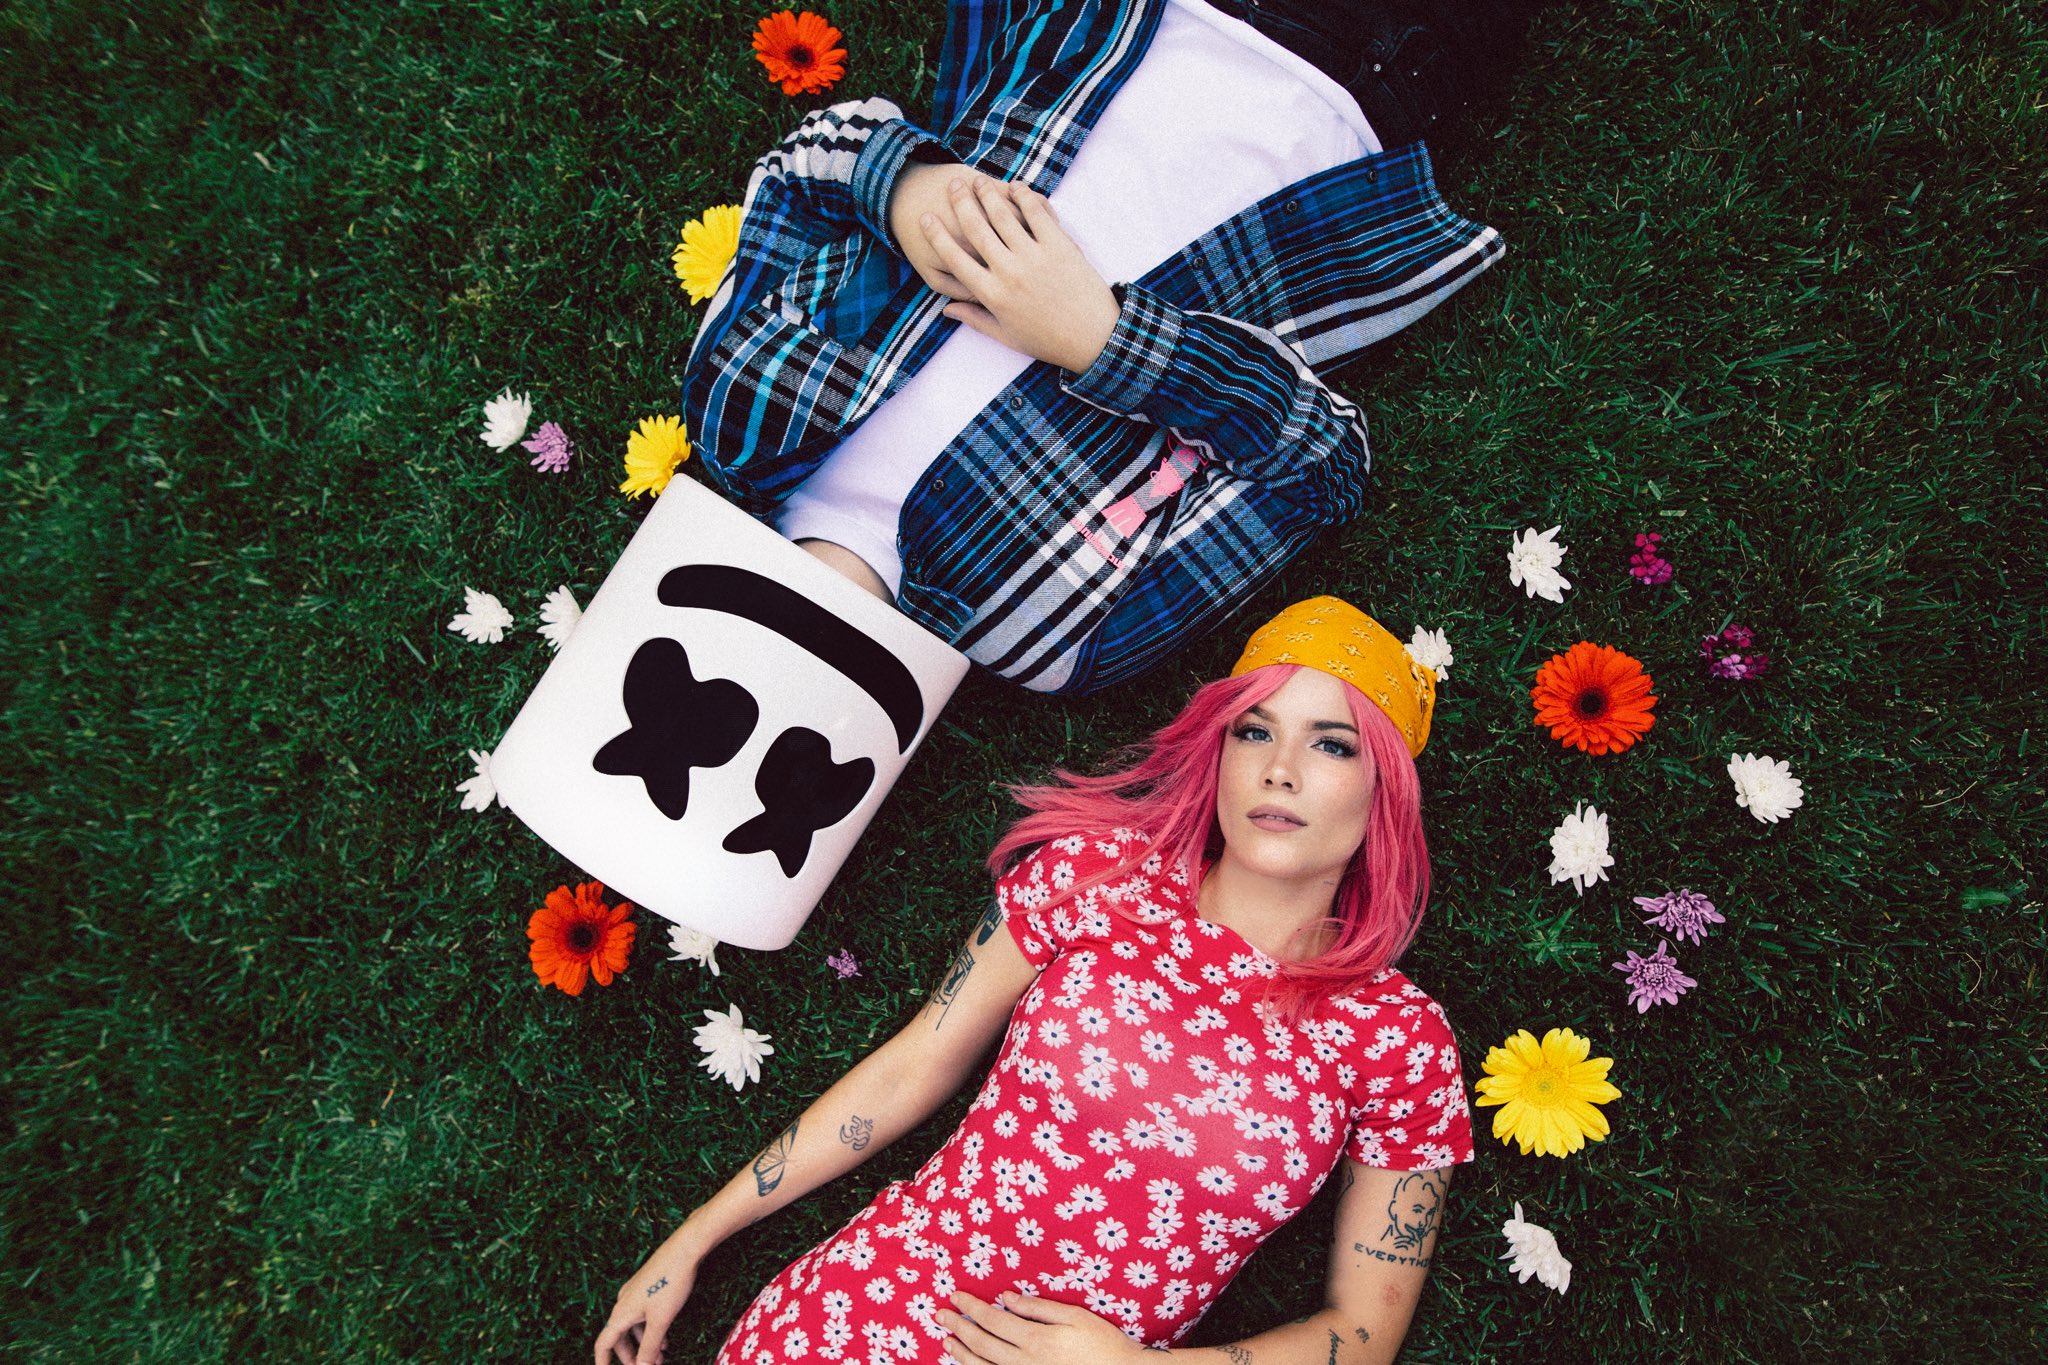 New Music: Halsey and Marshmello’s heartfelt new single ‘Be Kind’. Listen Here: - 9 MUGIBSON